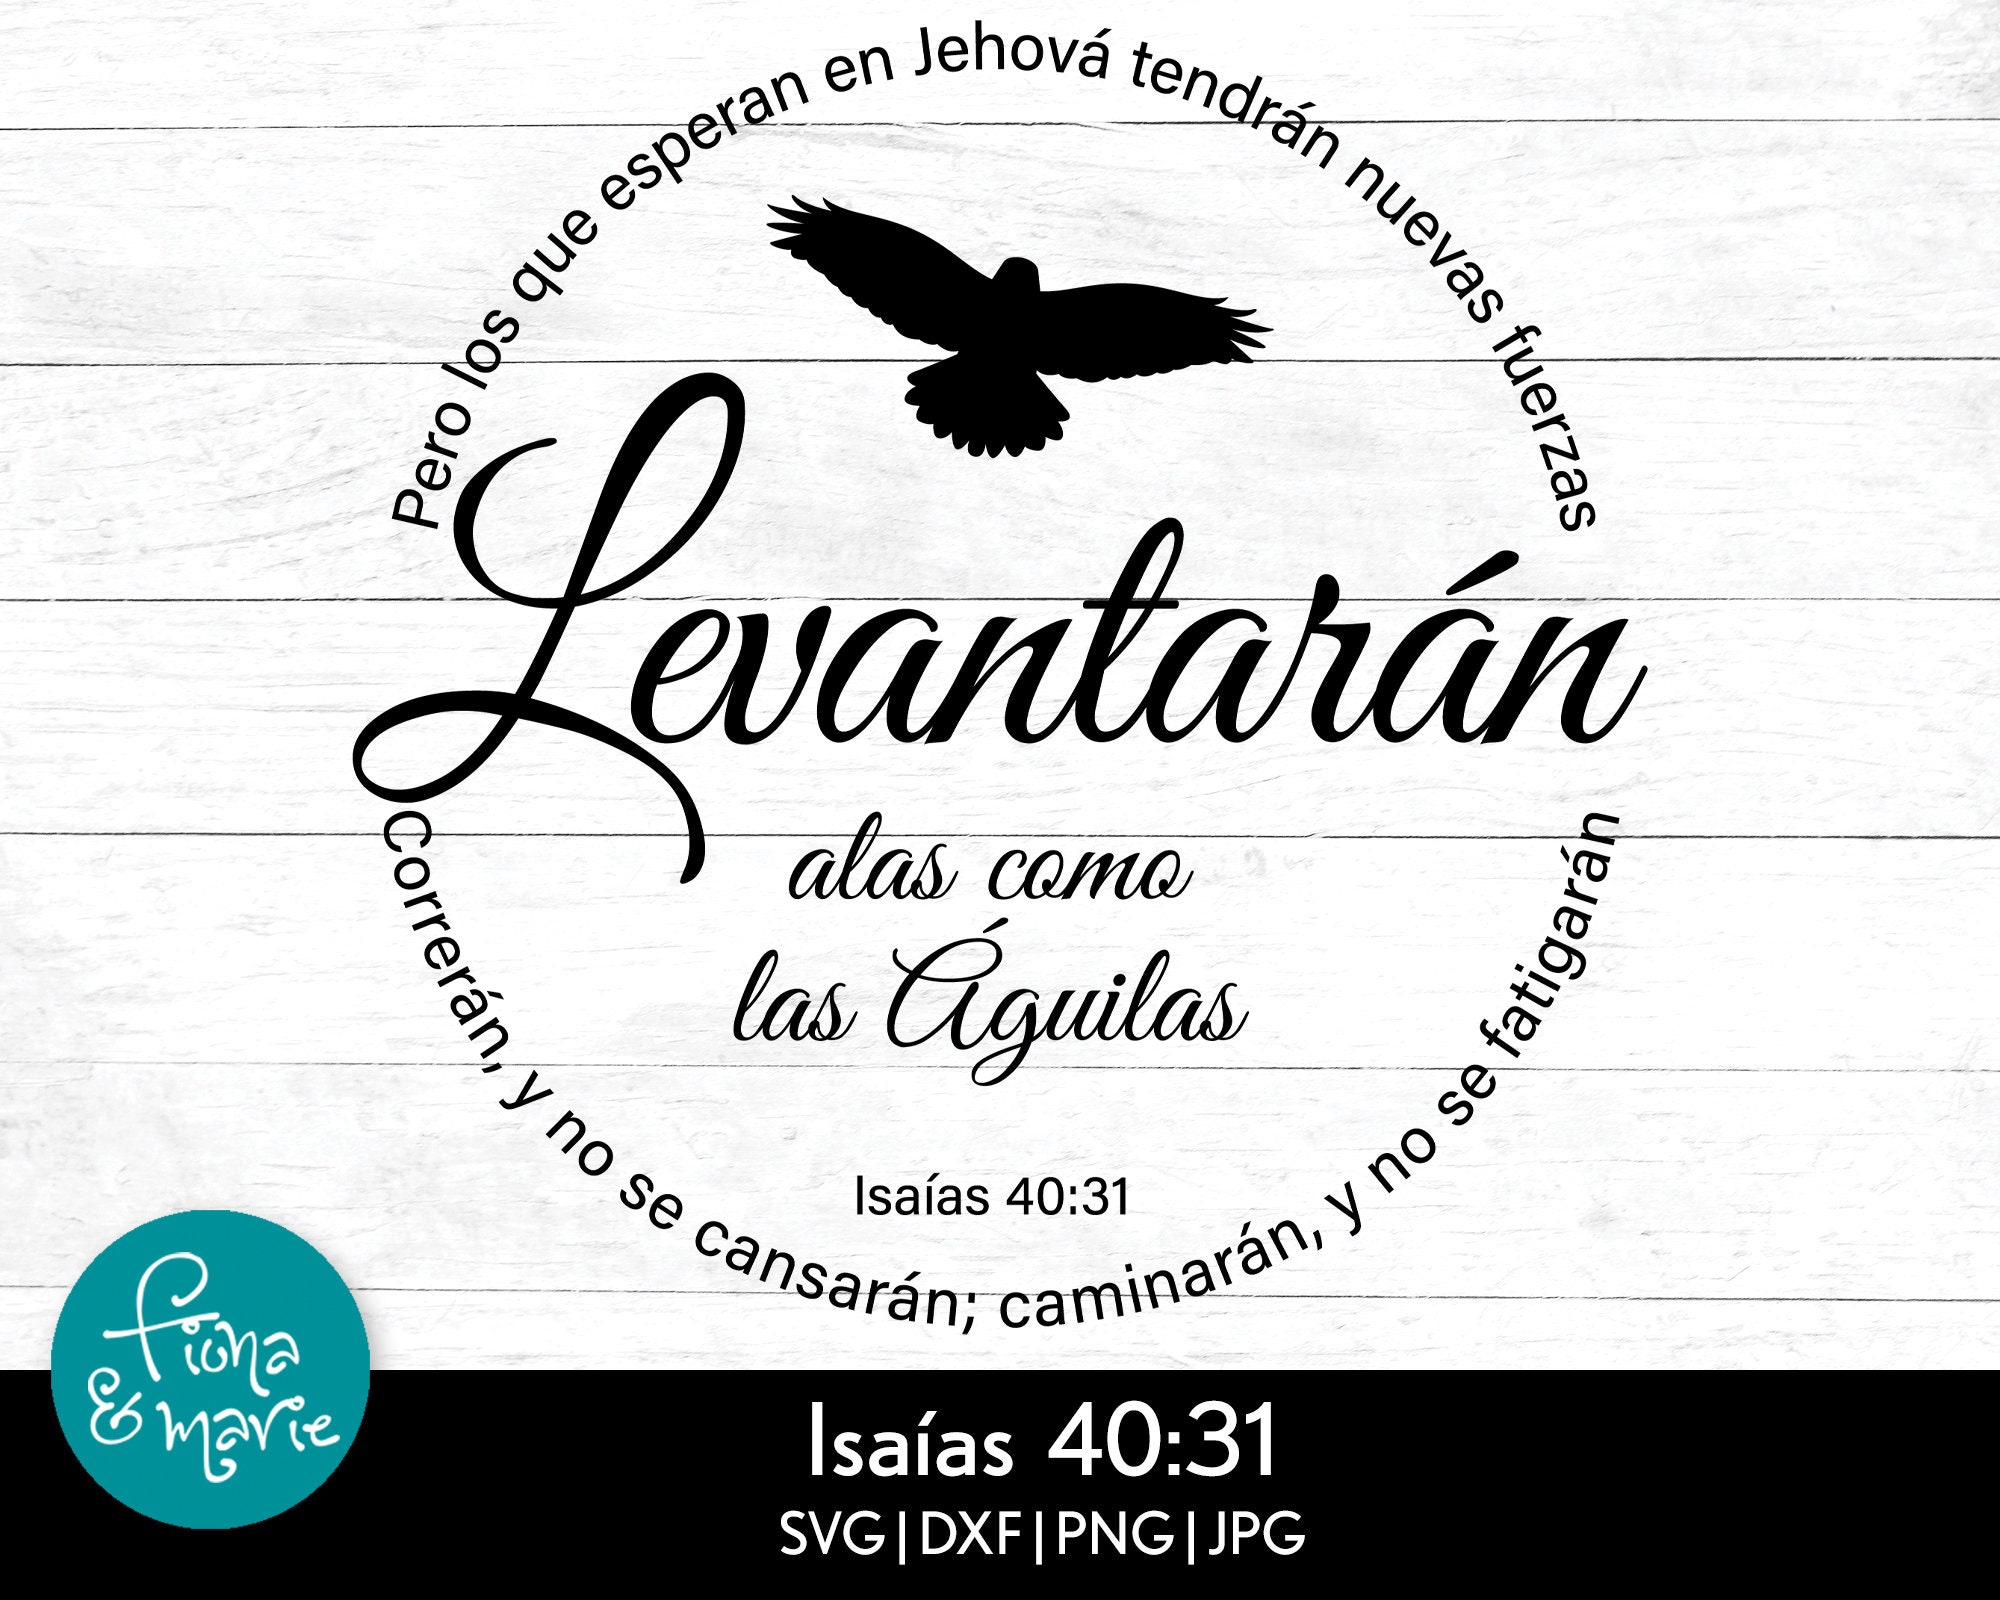 Levantarán Alas Como Las Águilas Isaías 40:31 Spanish Bible - Etsy New  Zealand